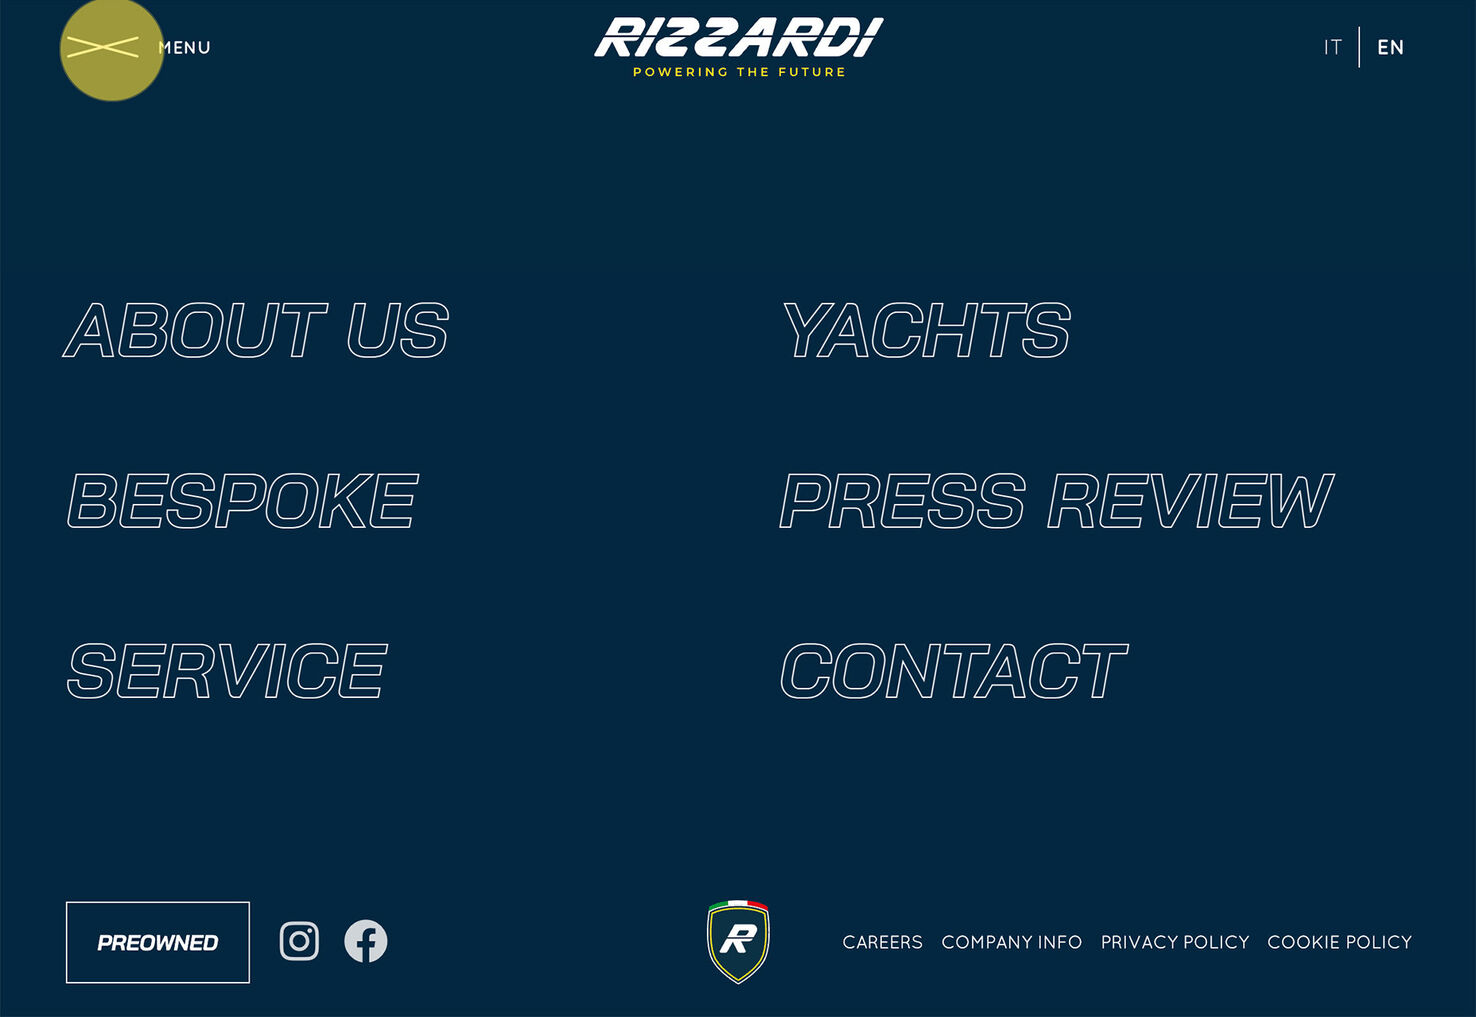 Rizzardi Yachts